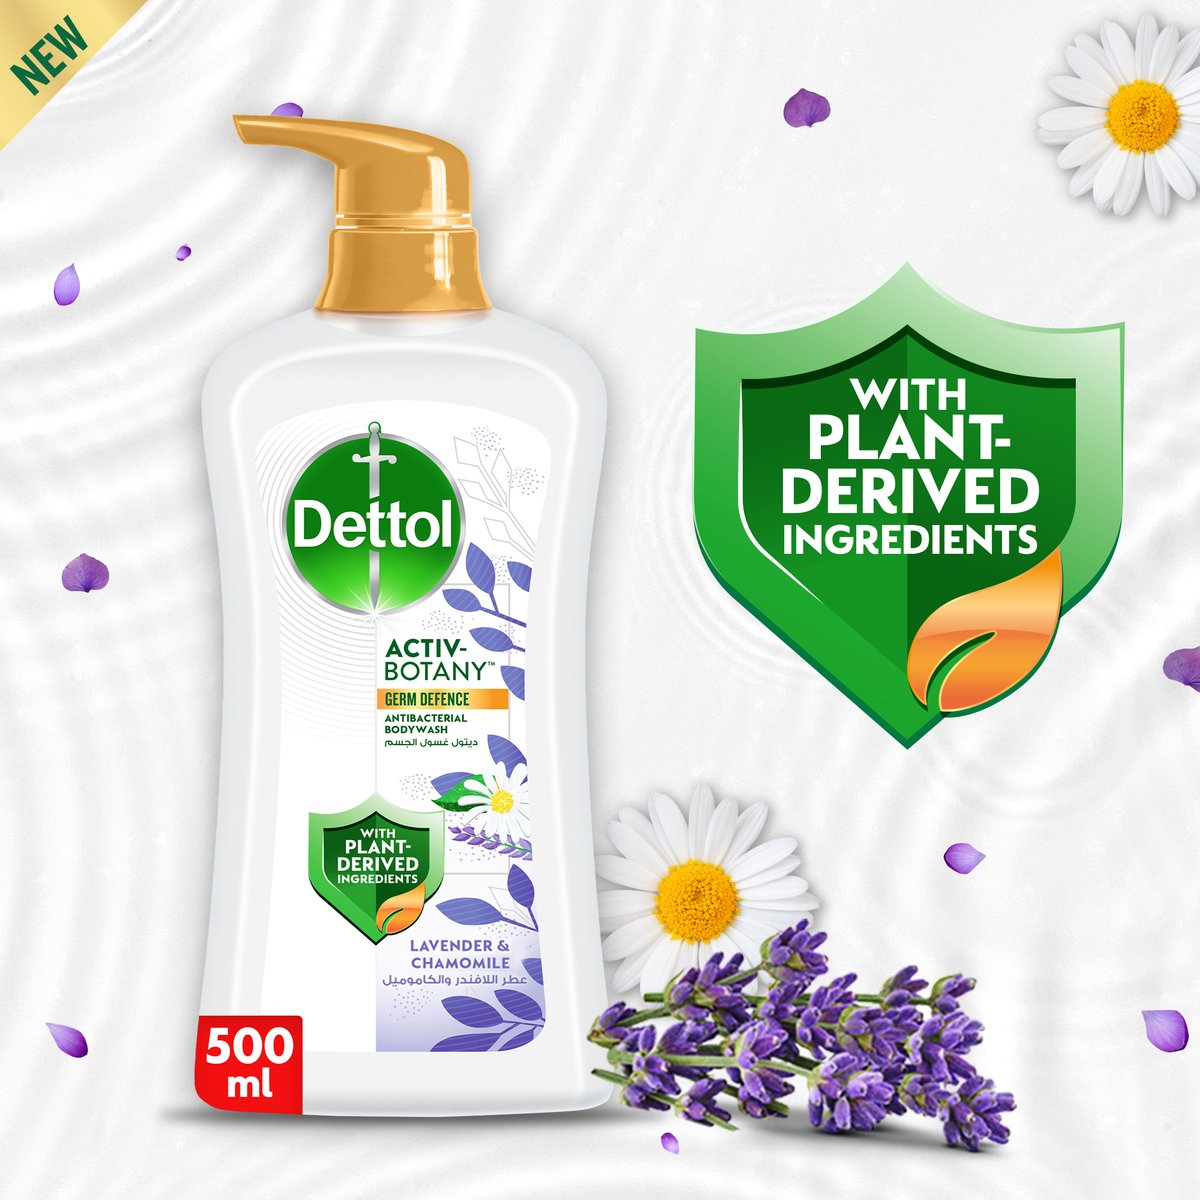 Dettol Activ-Botany Antibacterial Bodywash, Lavender & Chamomile Fragrance 500 ml